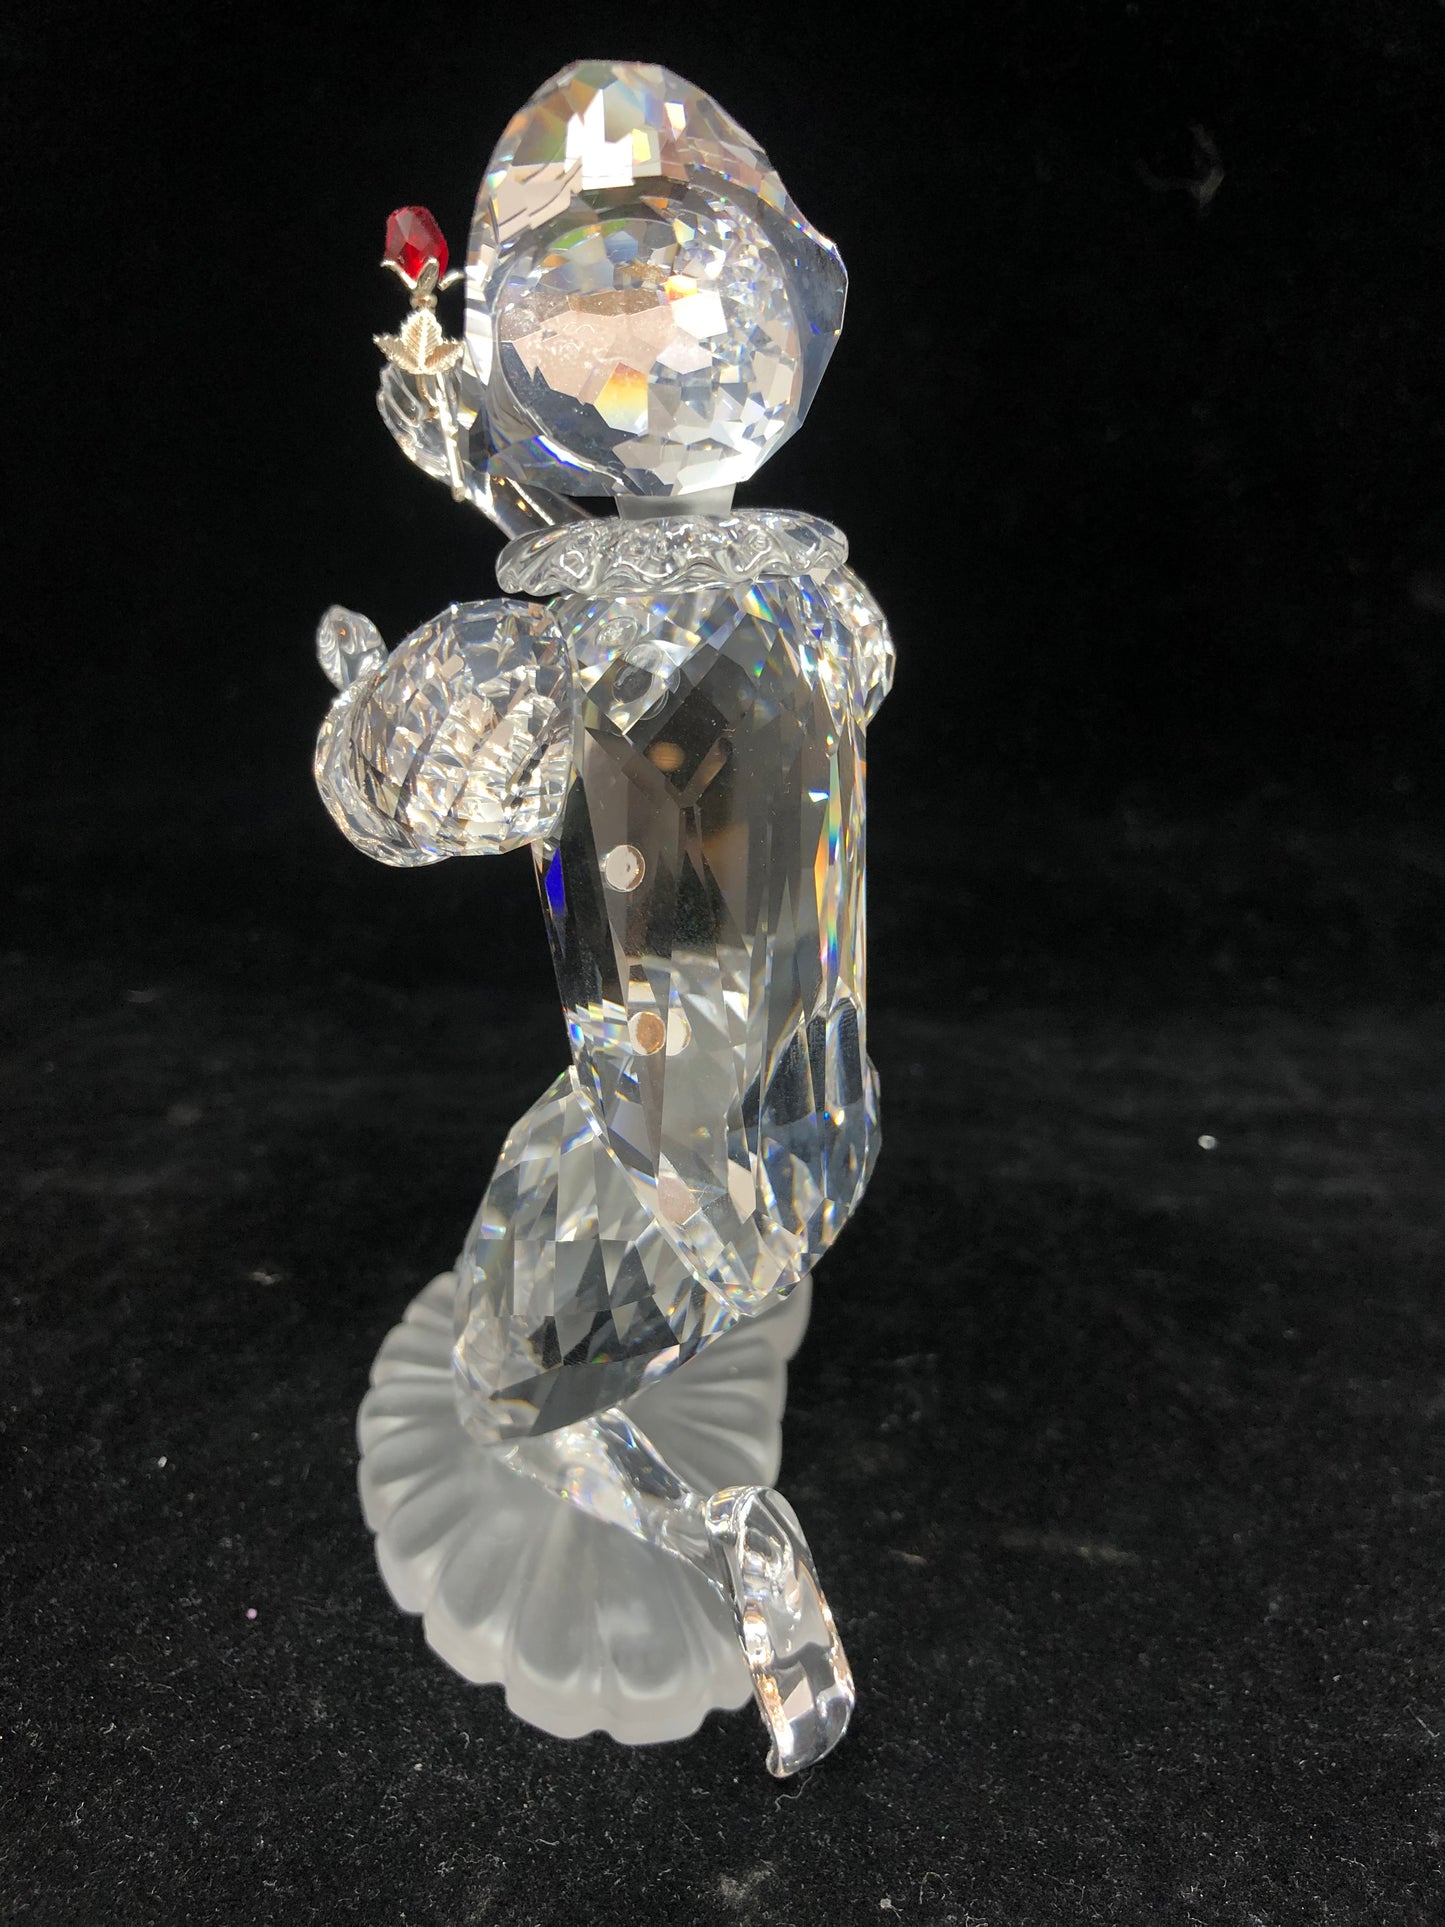 Swarovski "Masquerade" Harlequin SCS 2001 Crystal Figurine